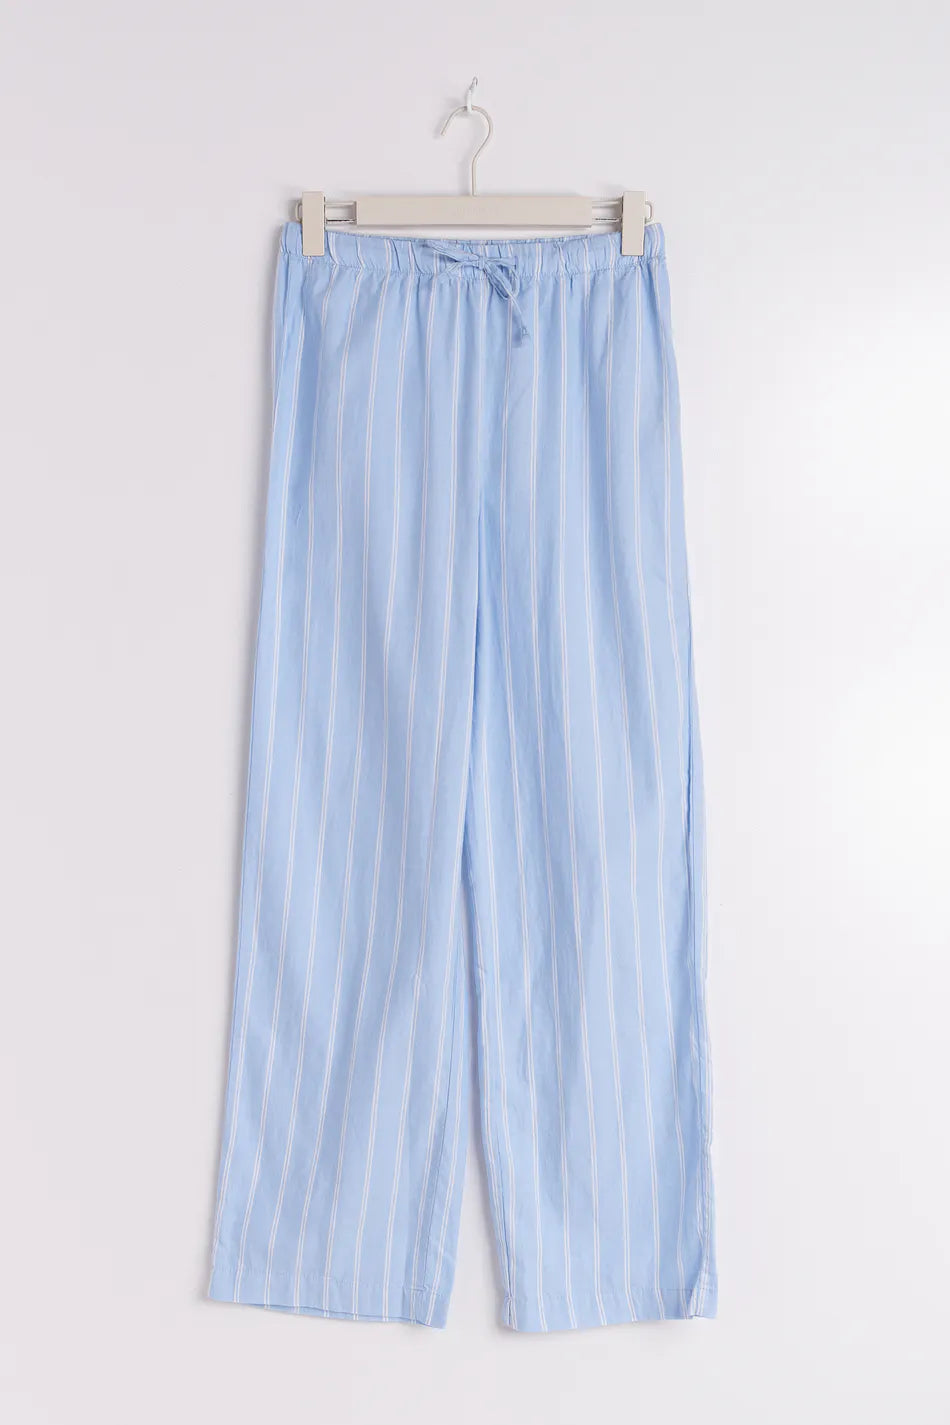 Flannel pyjamas trousers